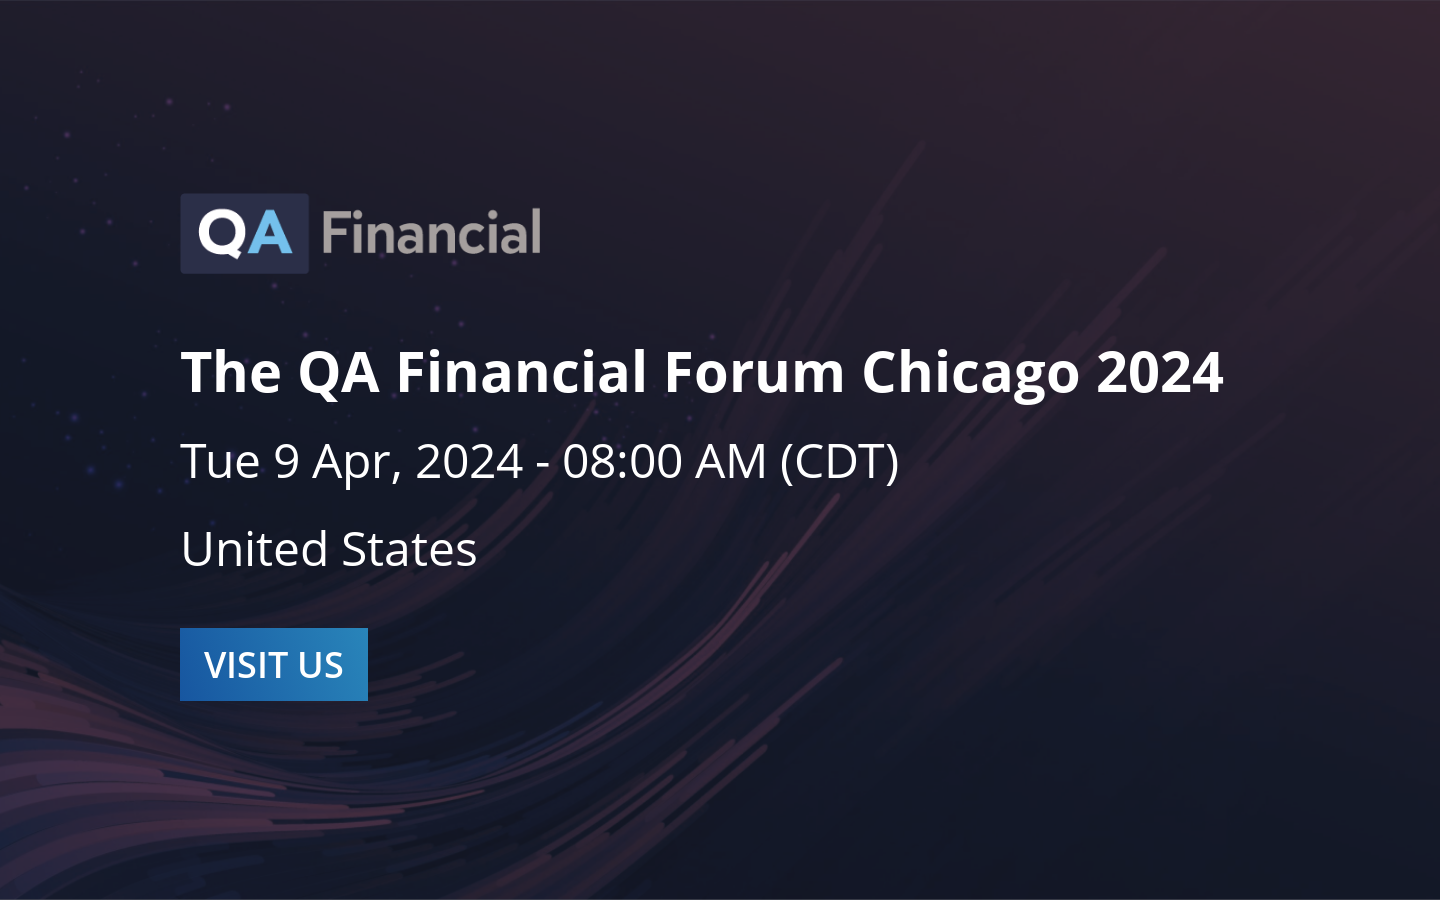 The QA Financial Forum Chicago 2024